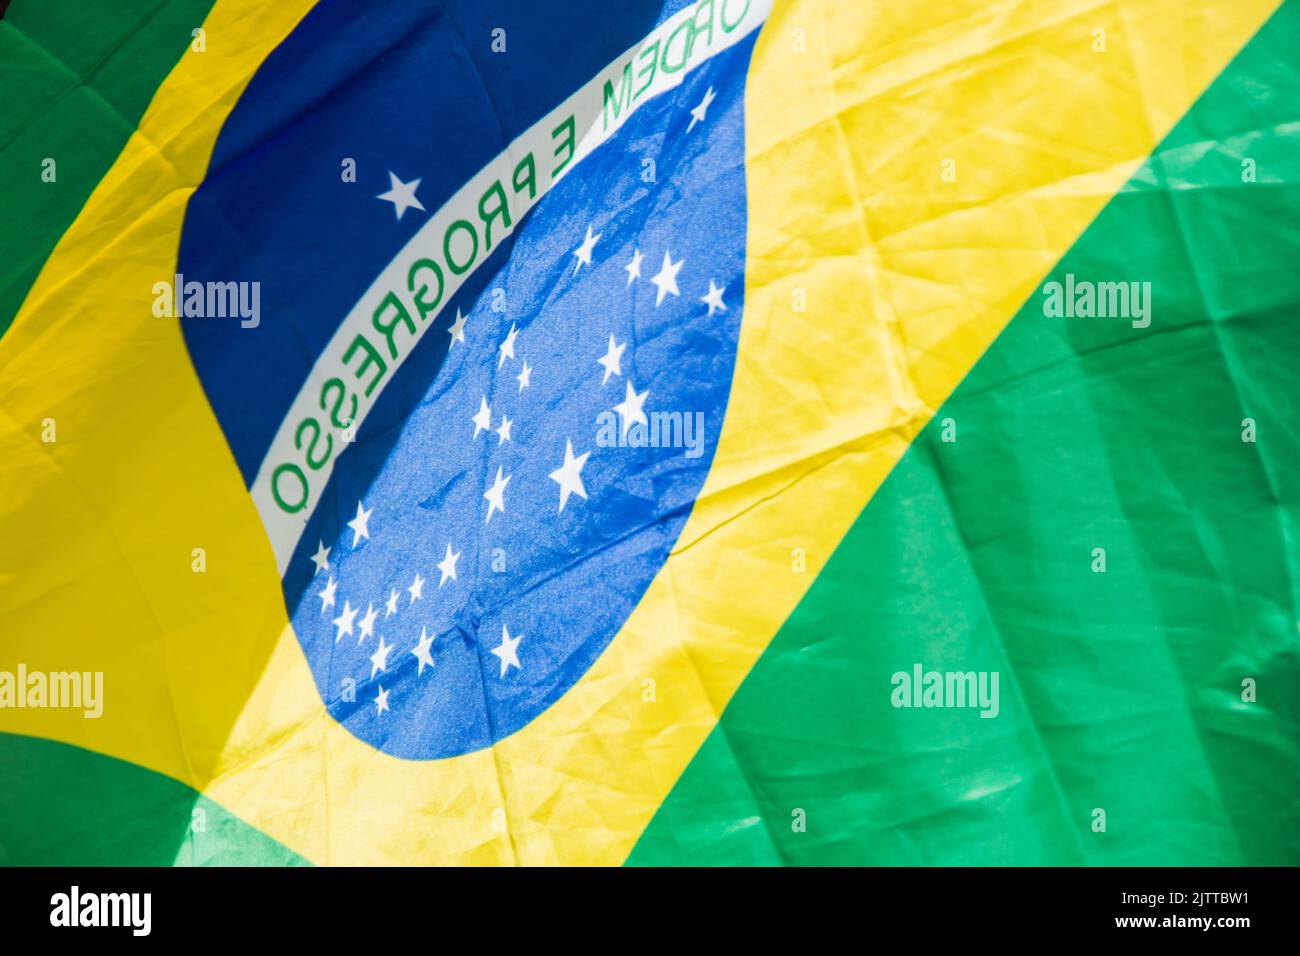 Brasilien Flagge auf dem Kopf im Freien in Rio de Janeiro Brasilien. Stockfoto